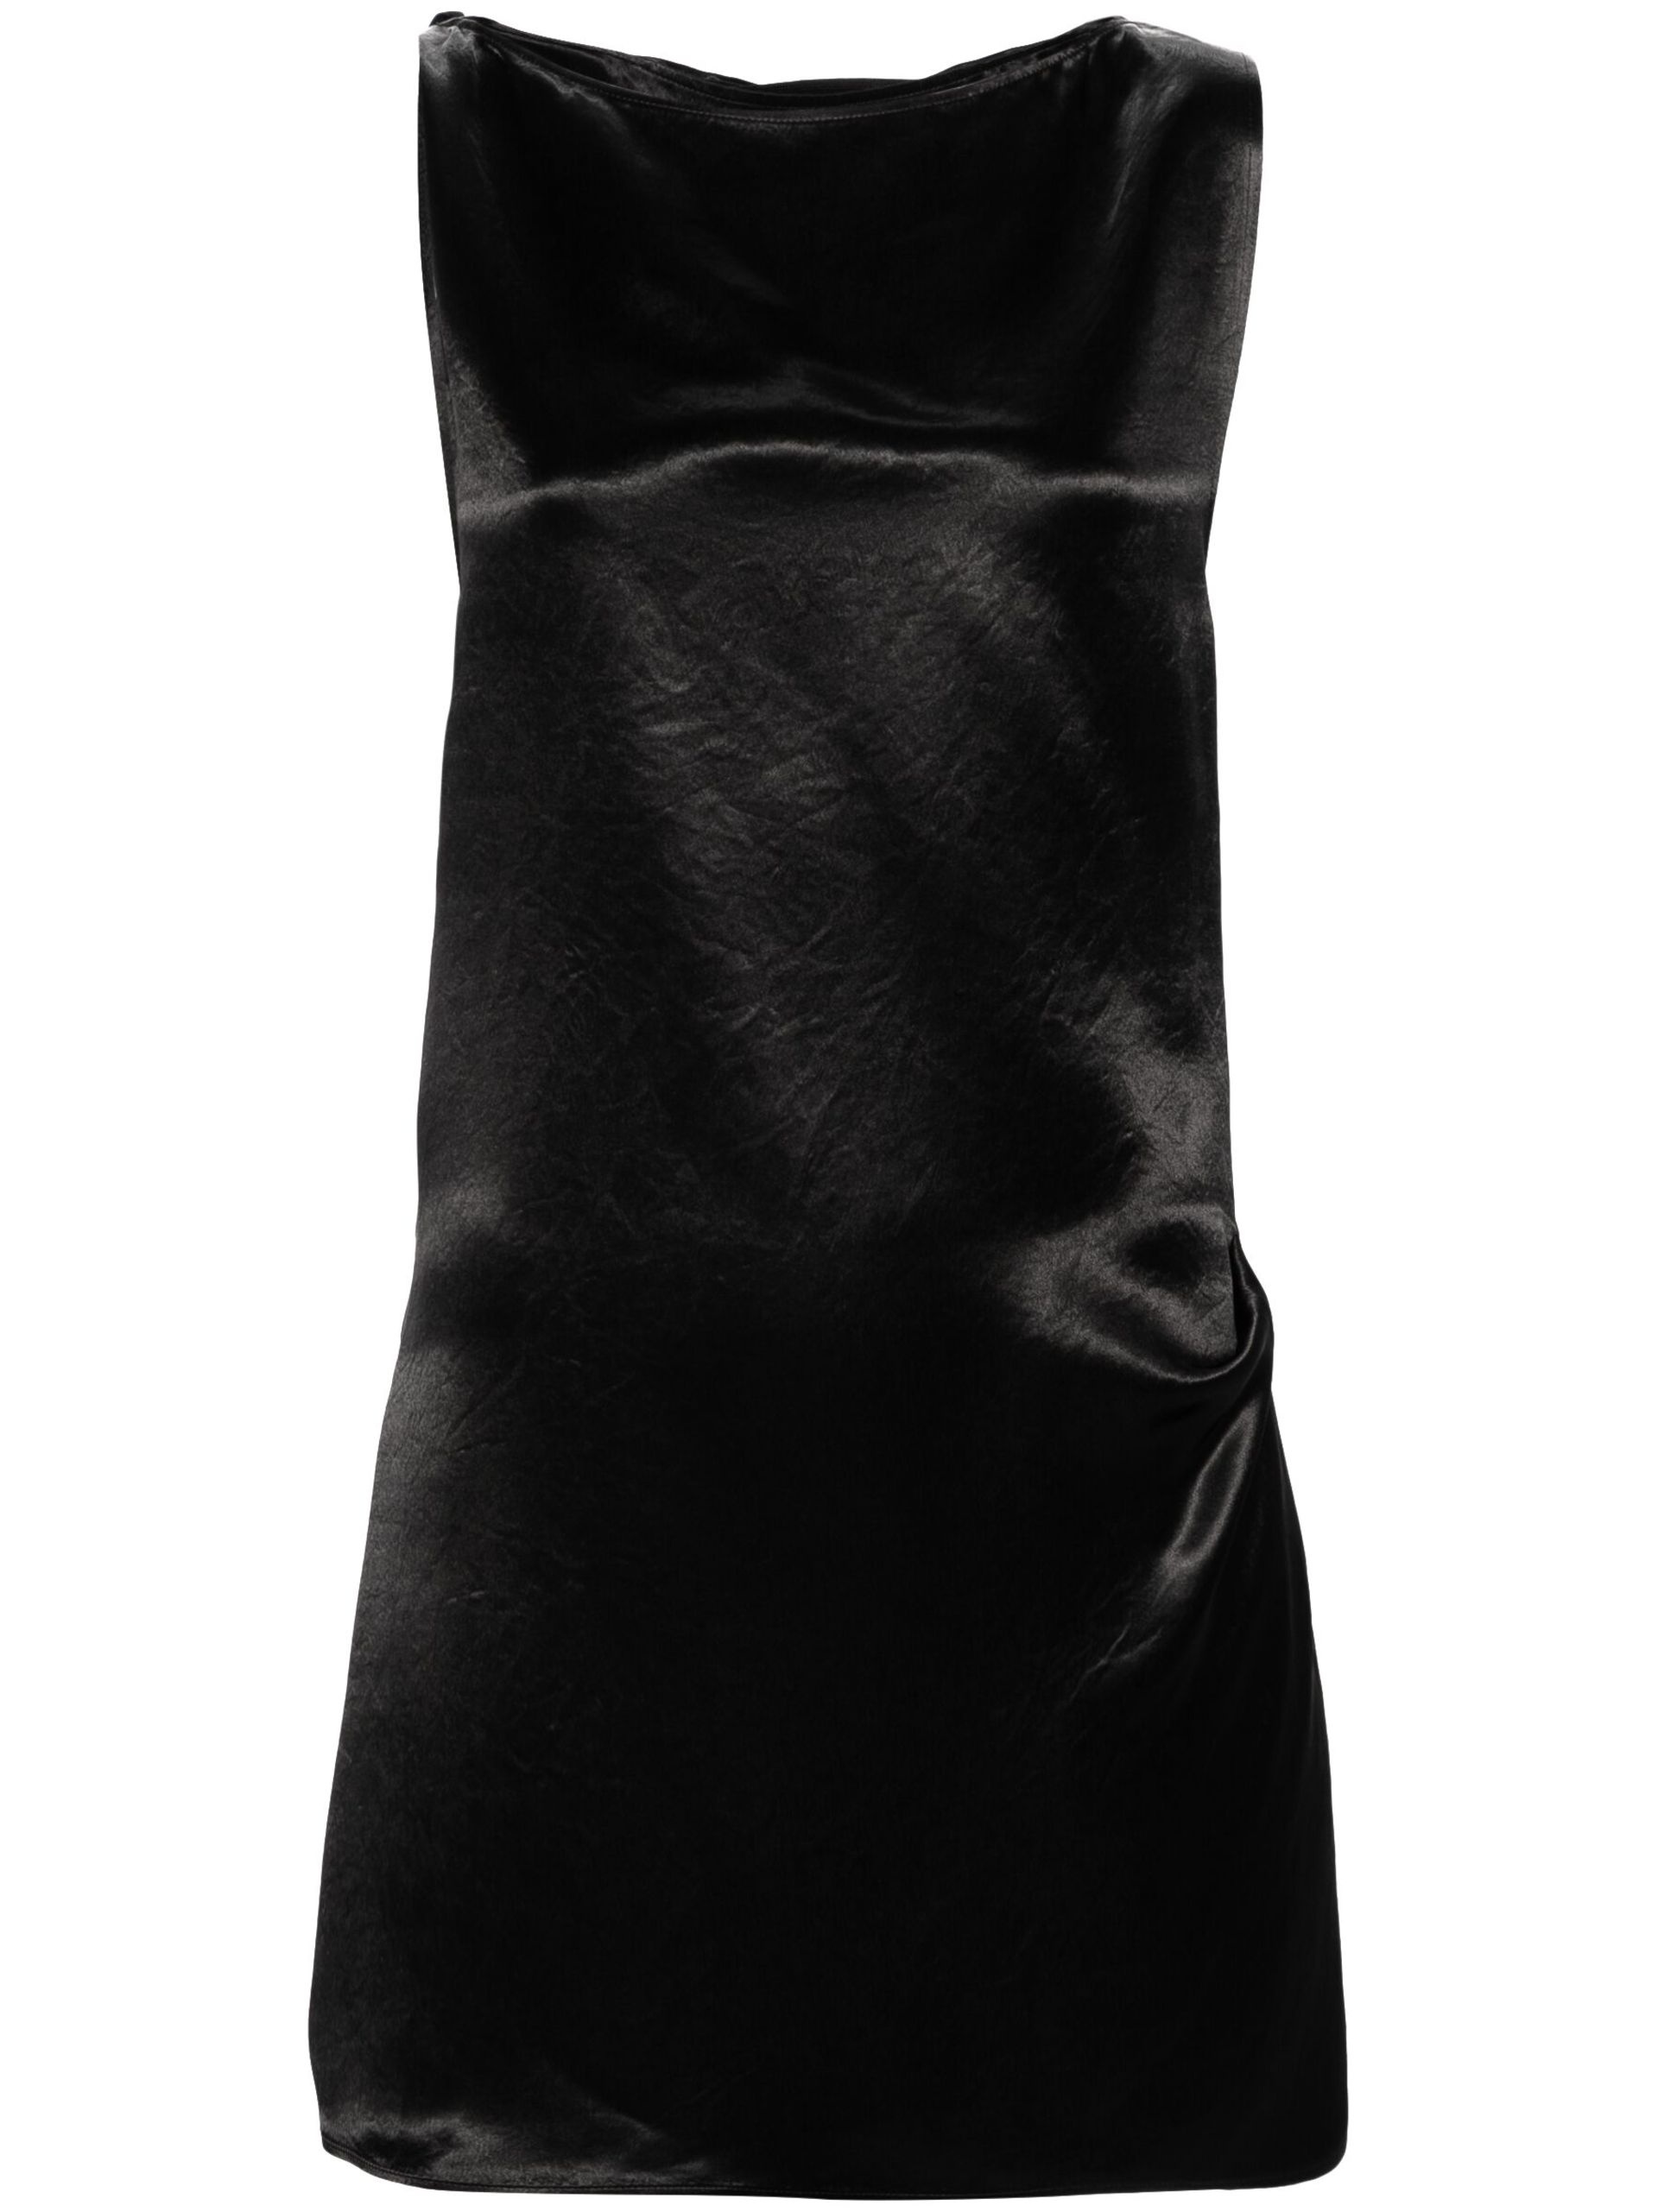 Black Lace-Up Satin Dress - 1